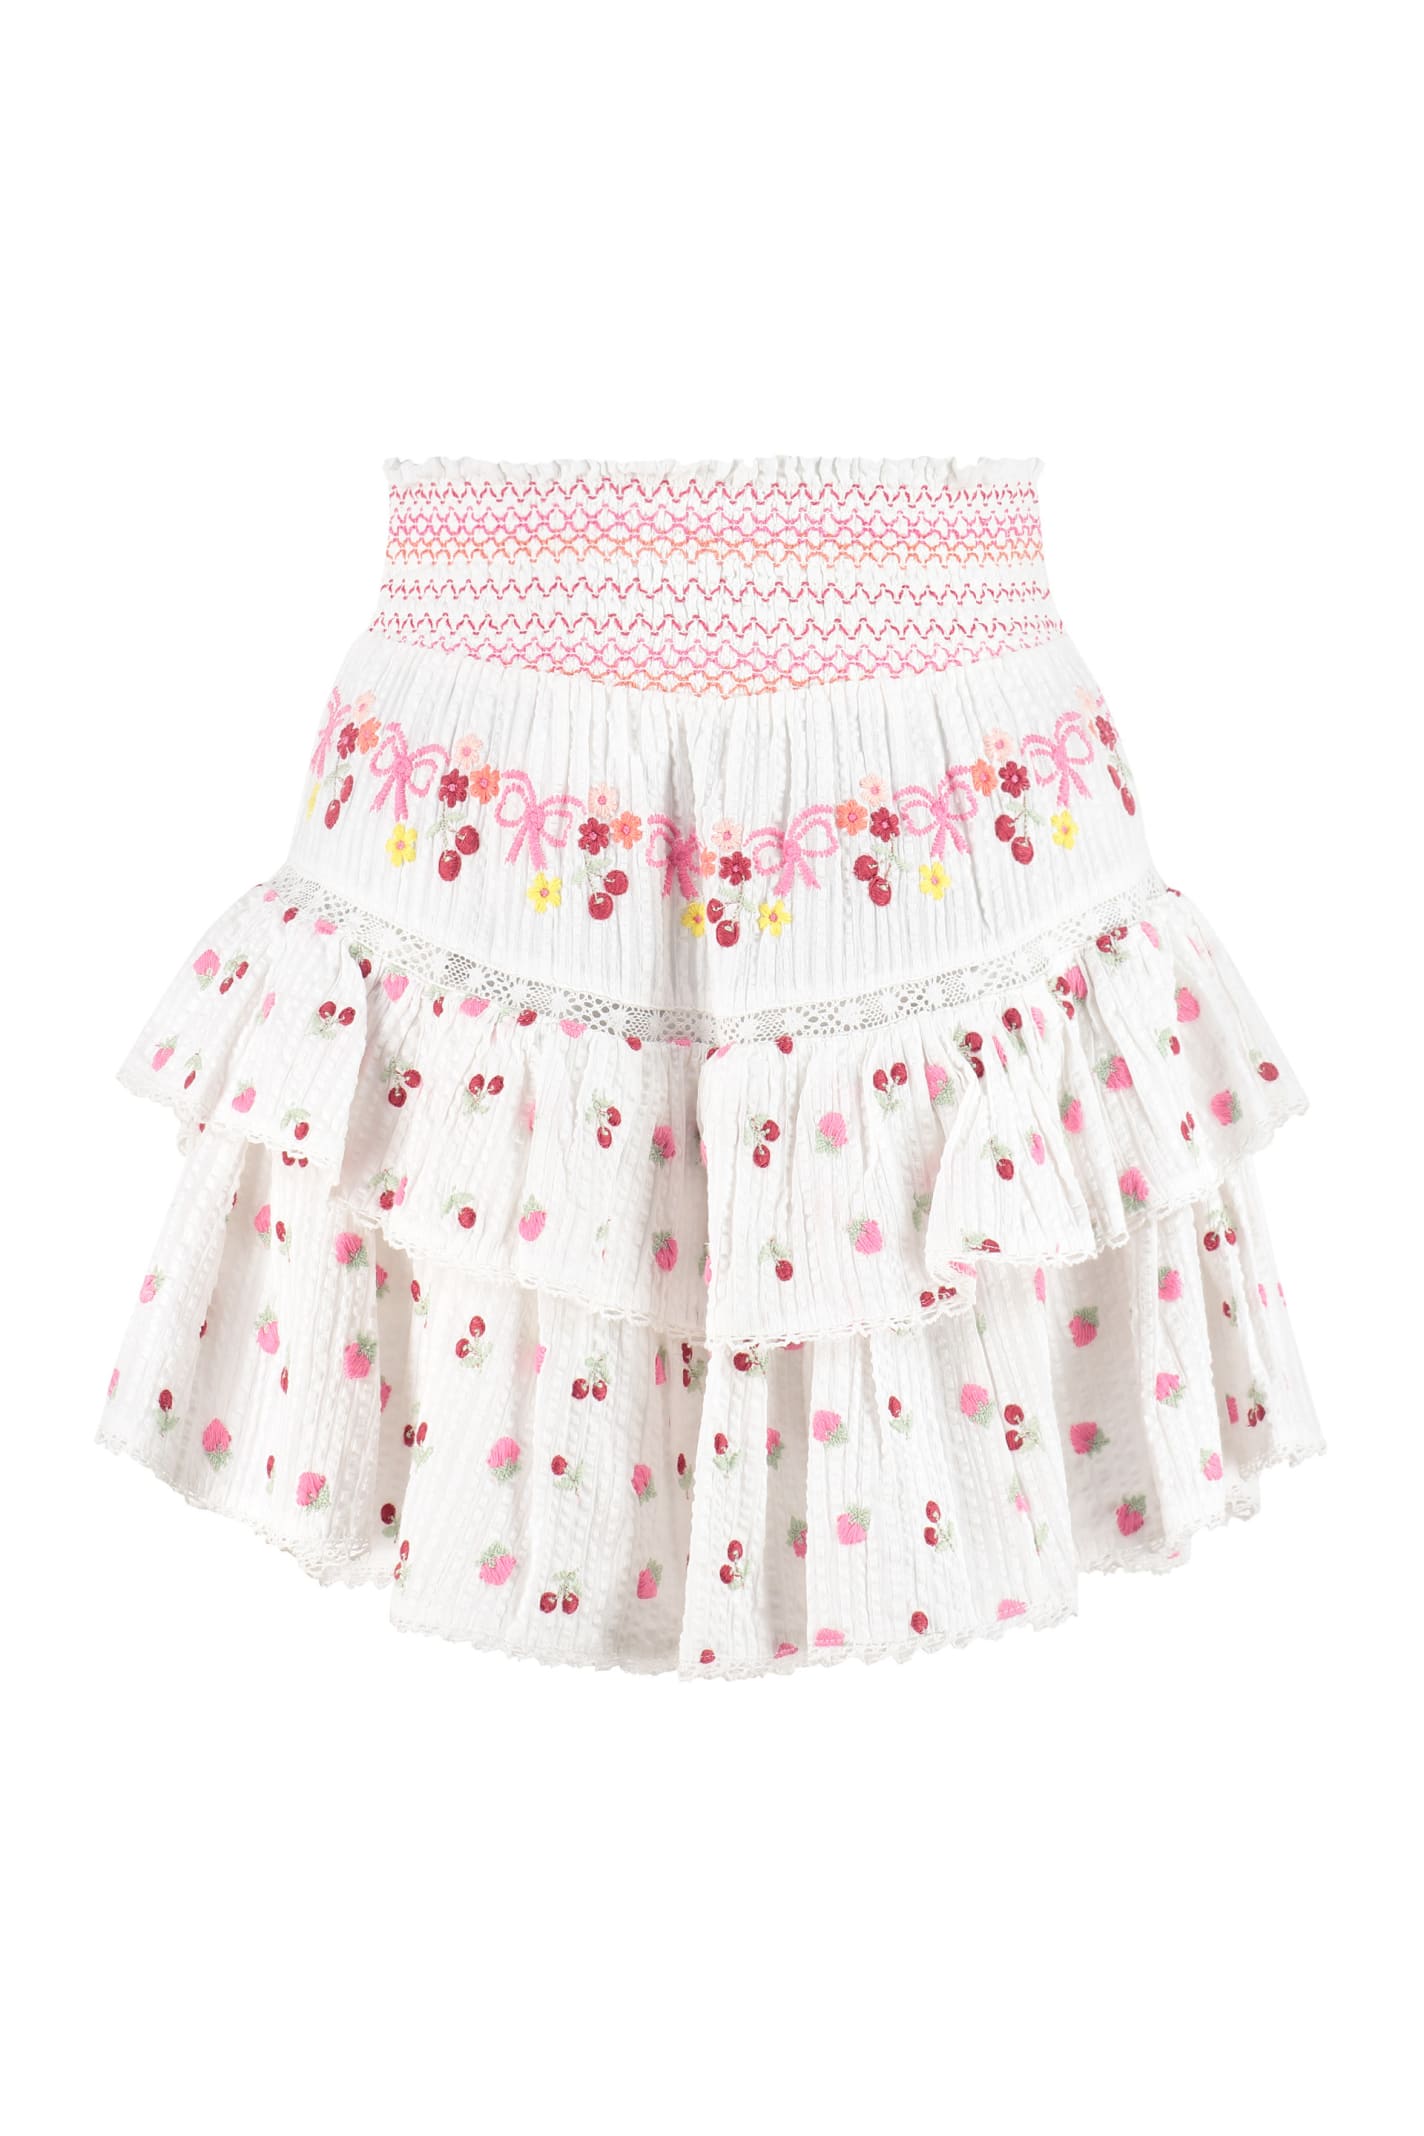 Loveshackfancy Babies' Talma Ruffled Mini Skirt In White